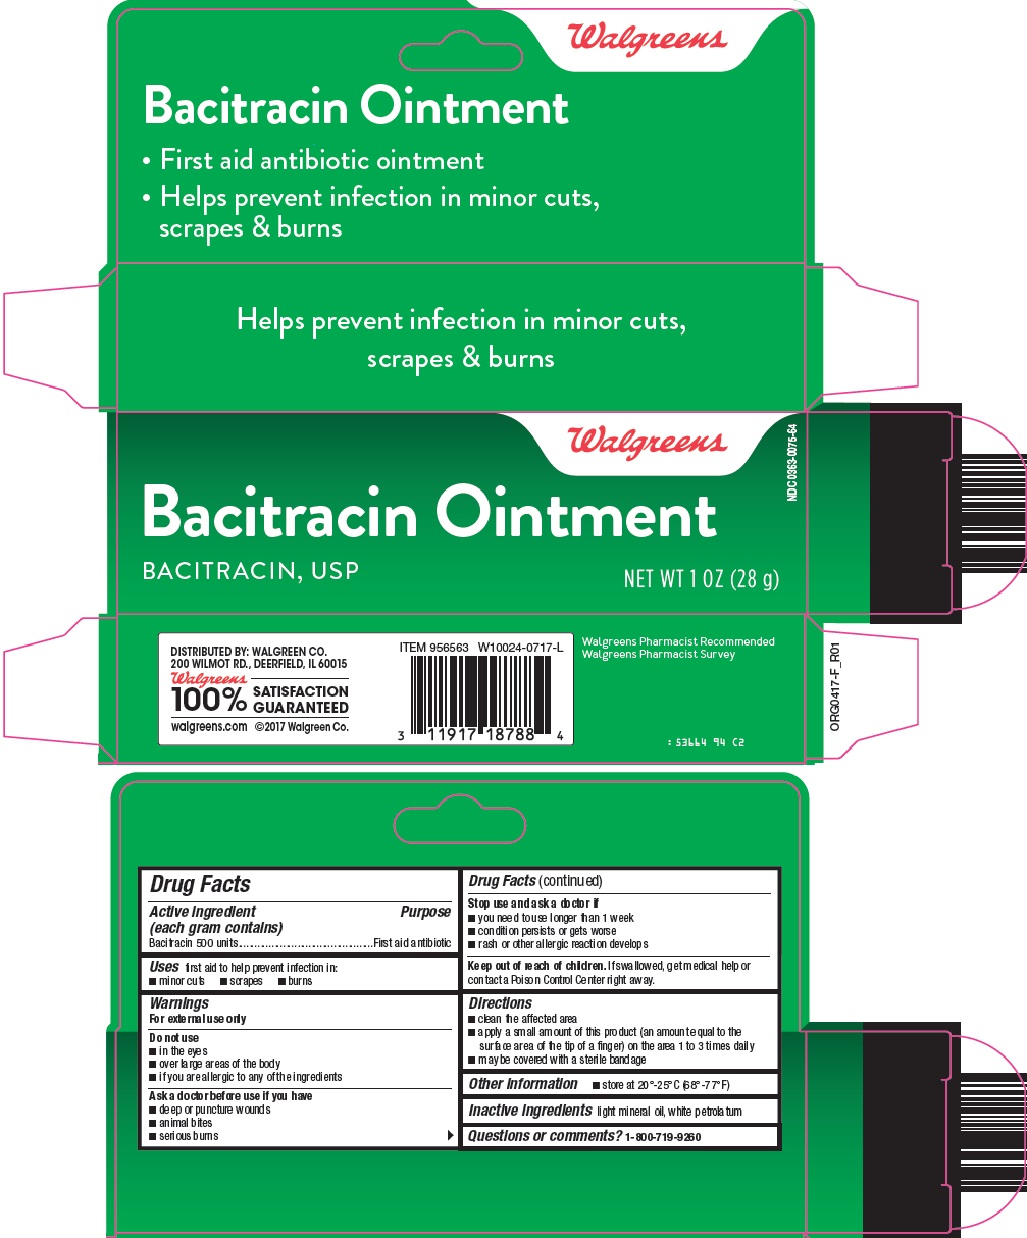 bacitracin ointment image